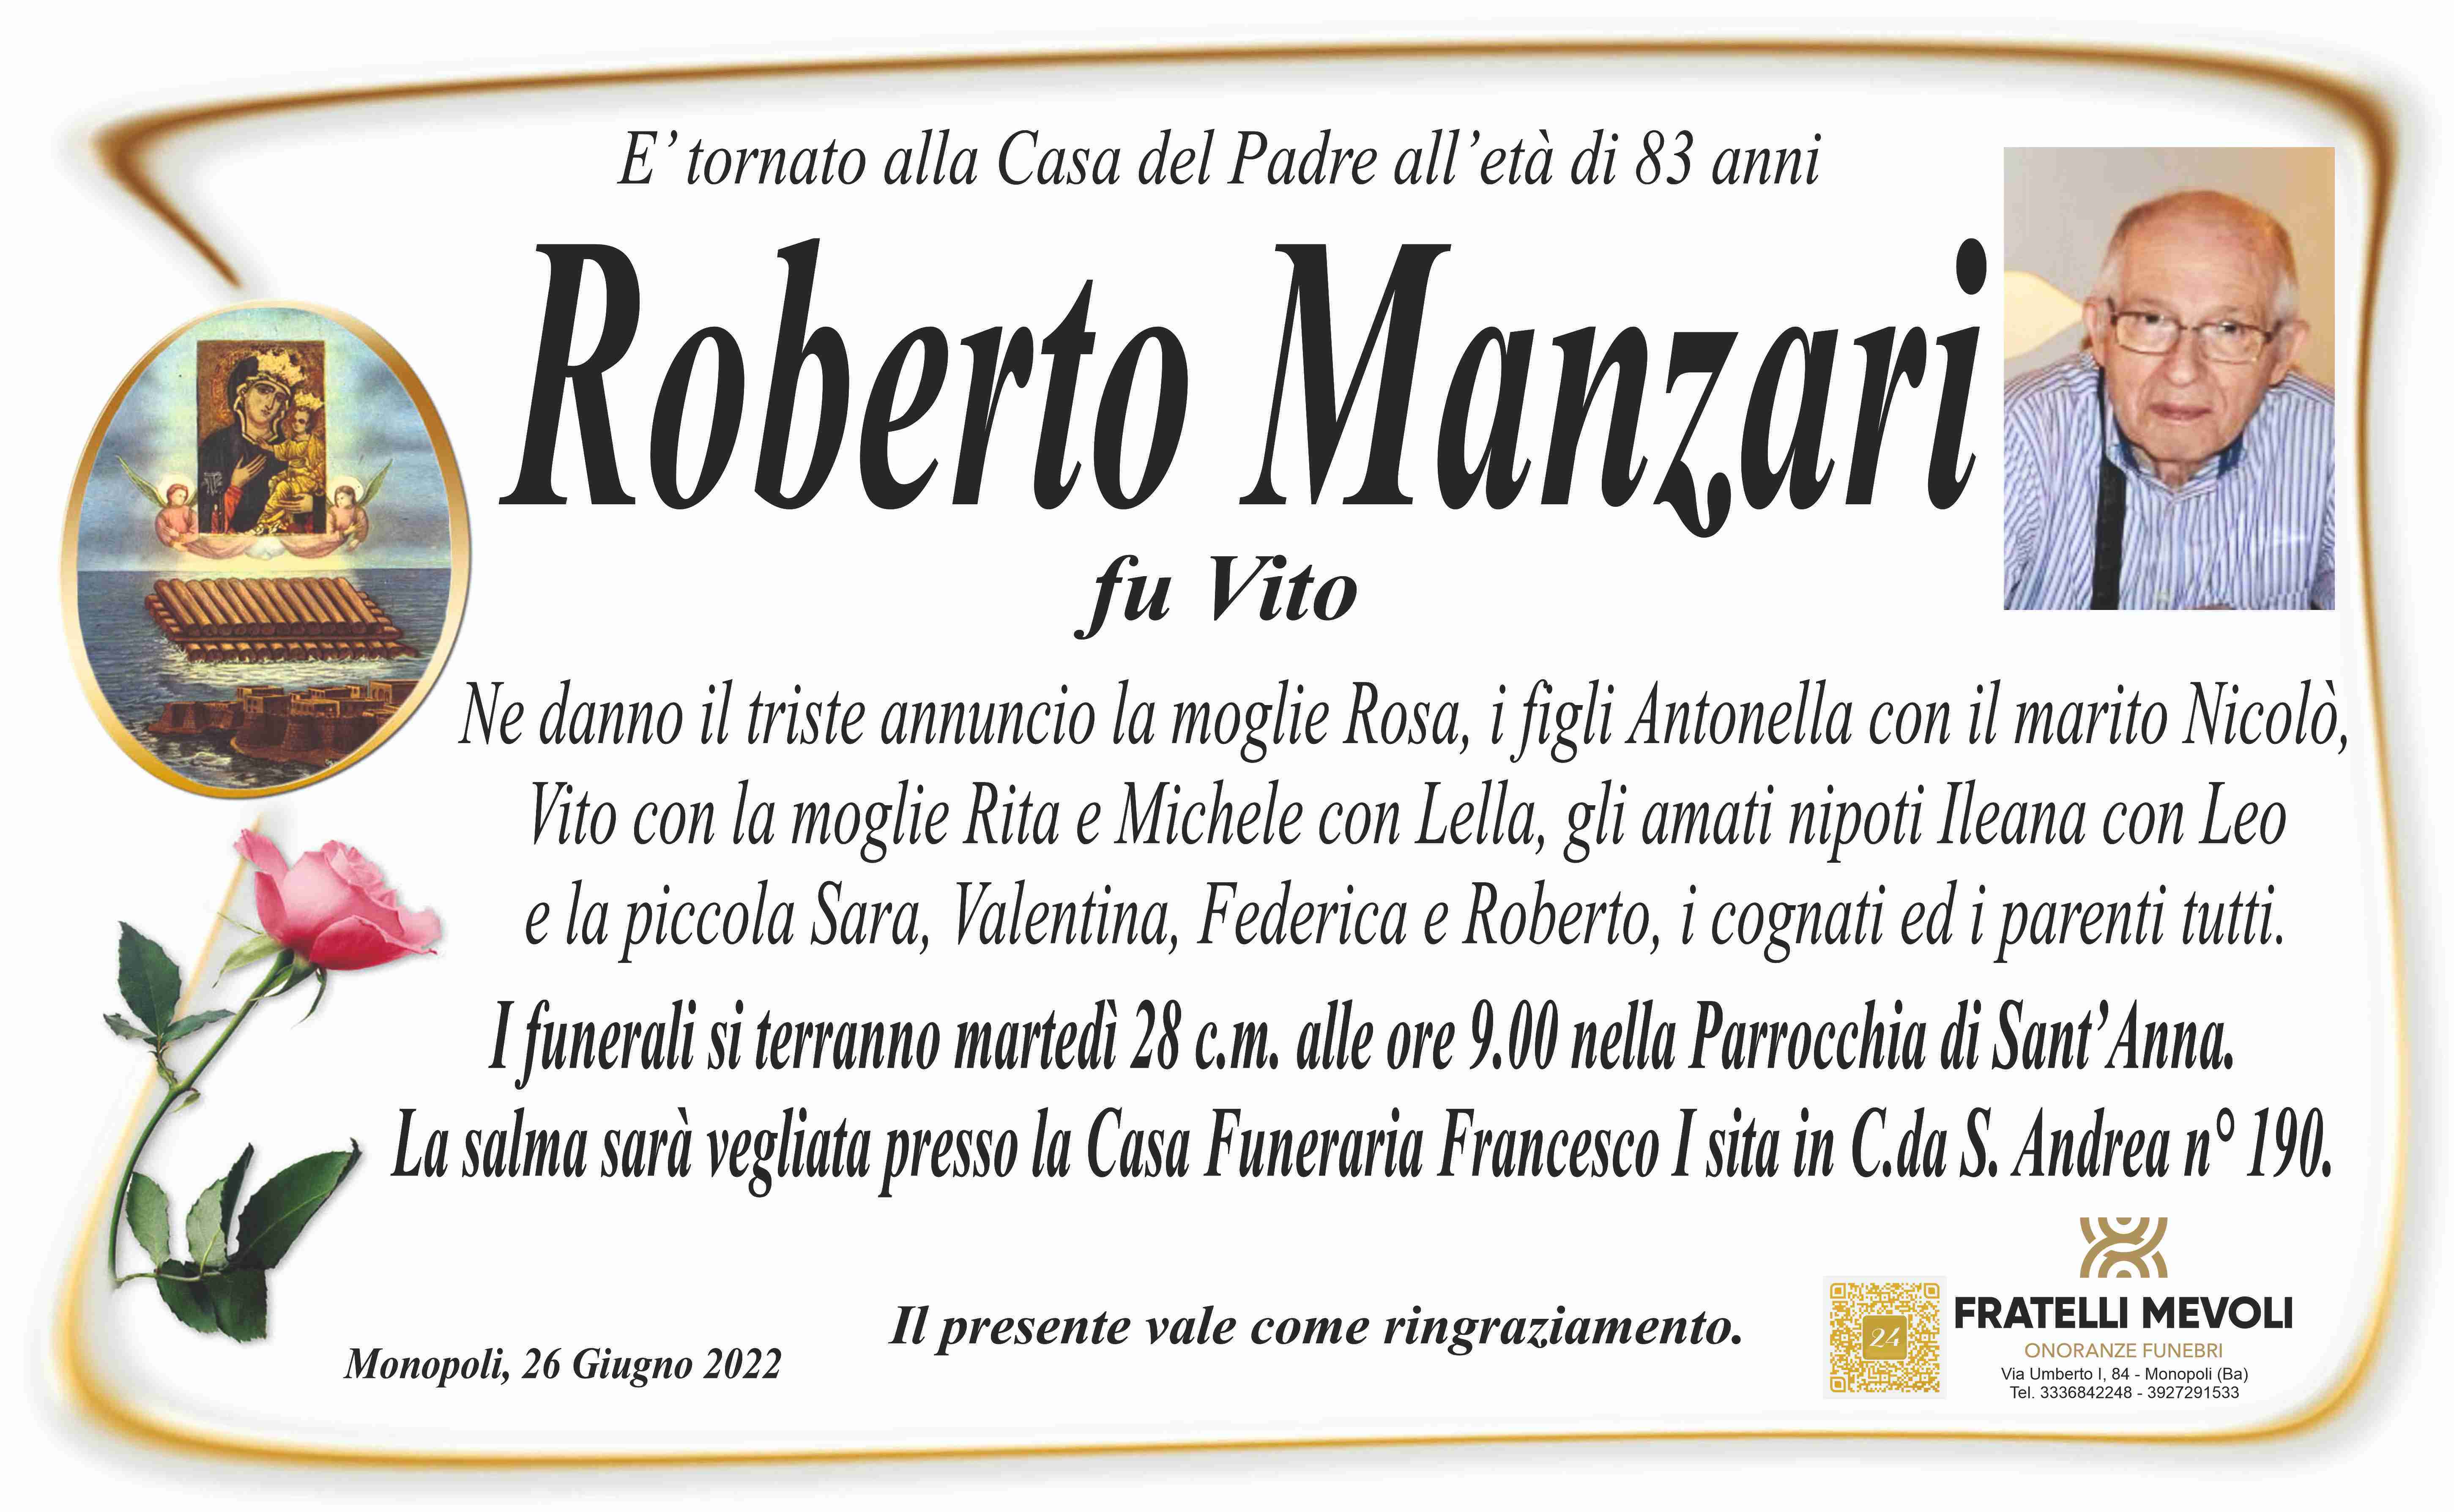 Roberto Manzari